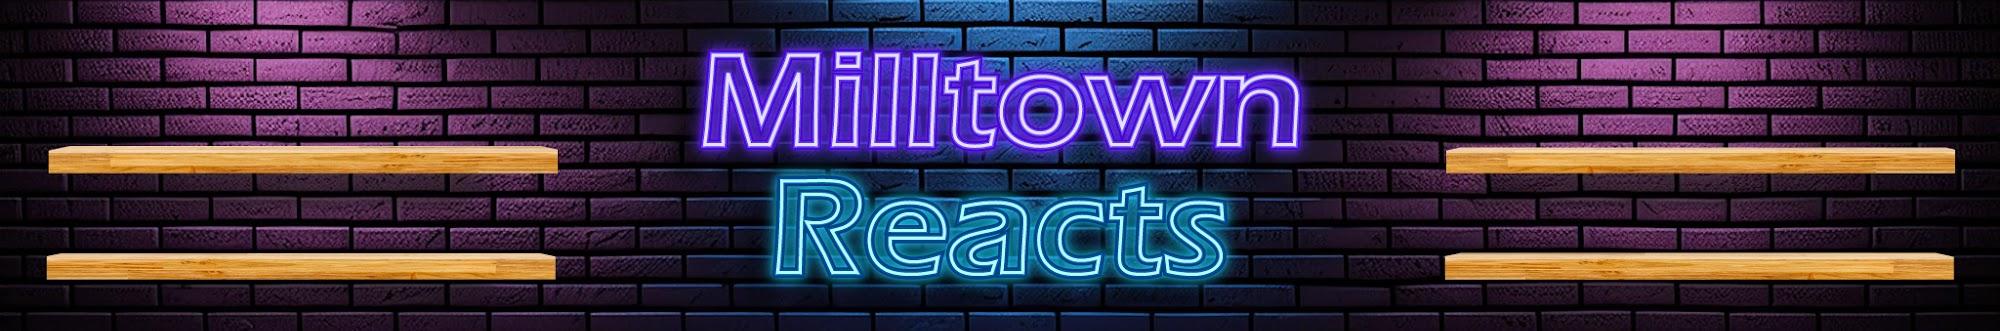 Milltown Reacts